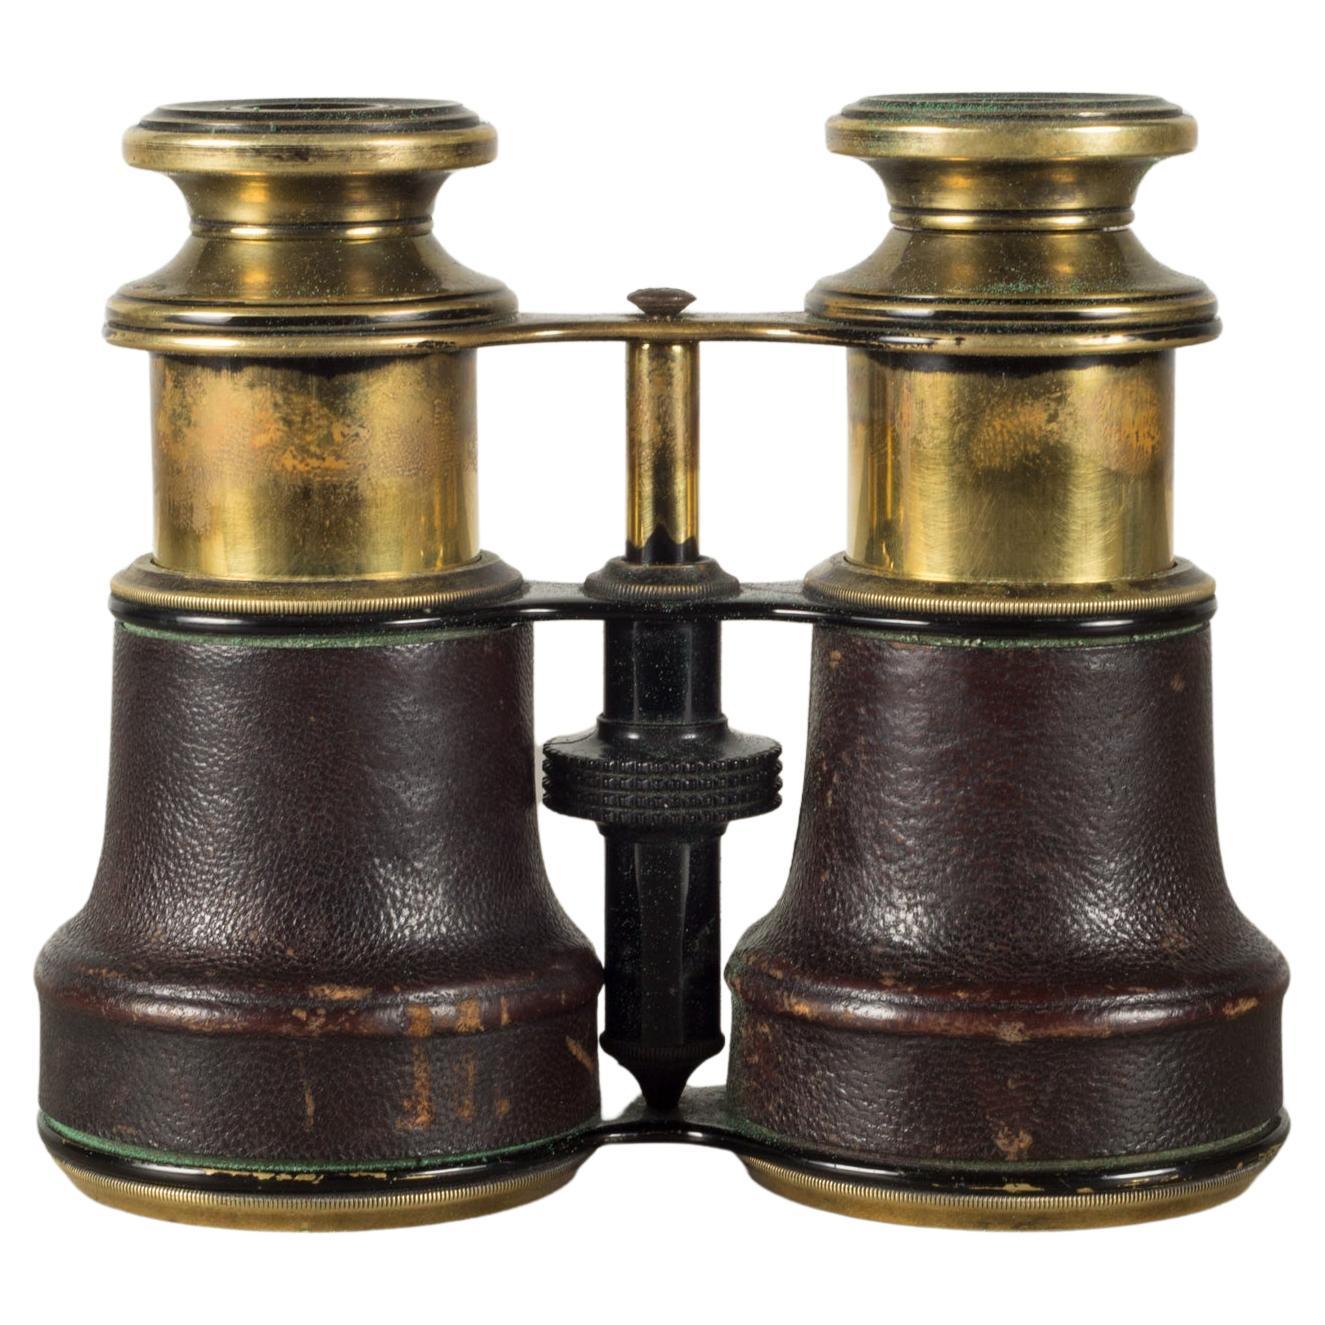 Antique Brass and Leather Binoculars c.1900-1940